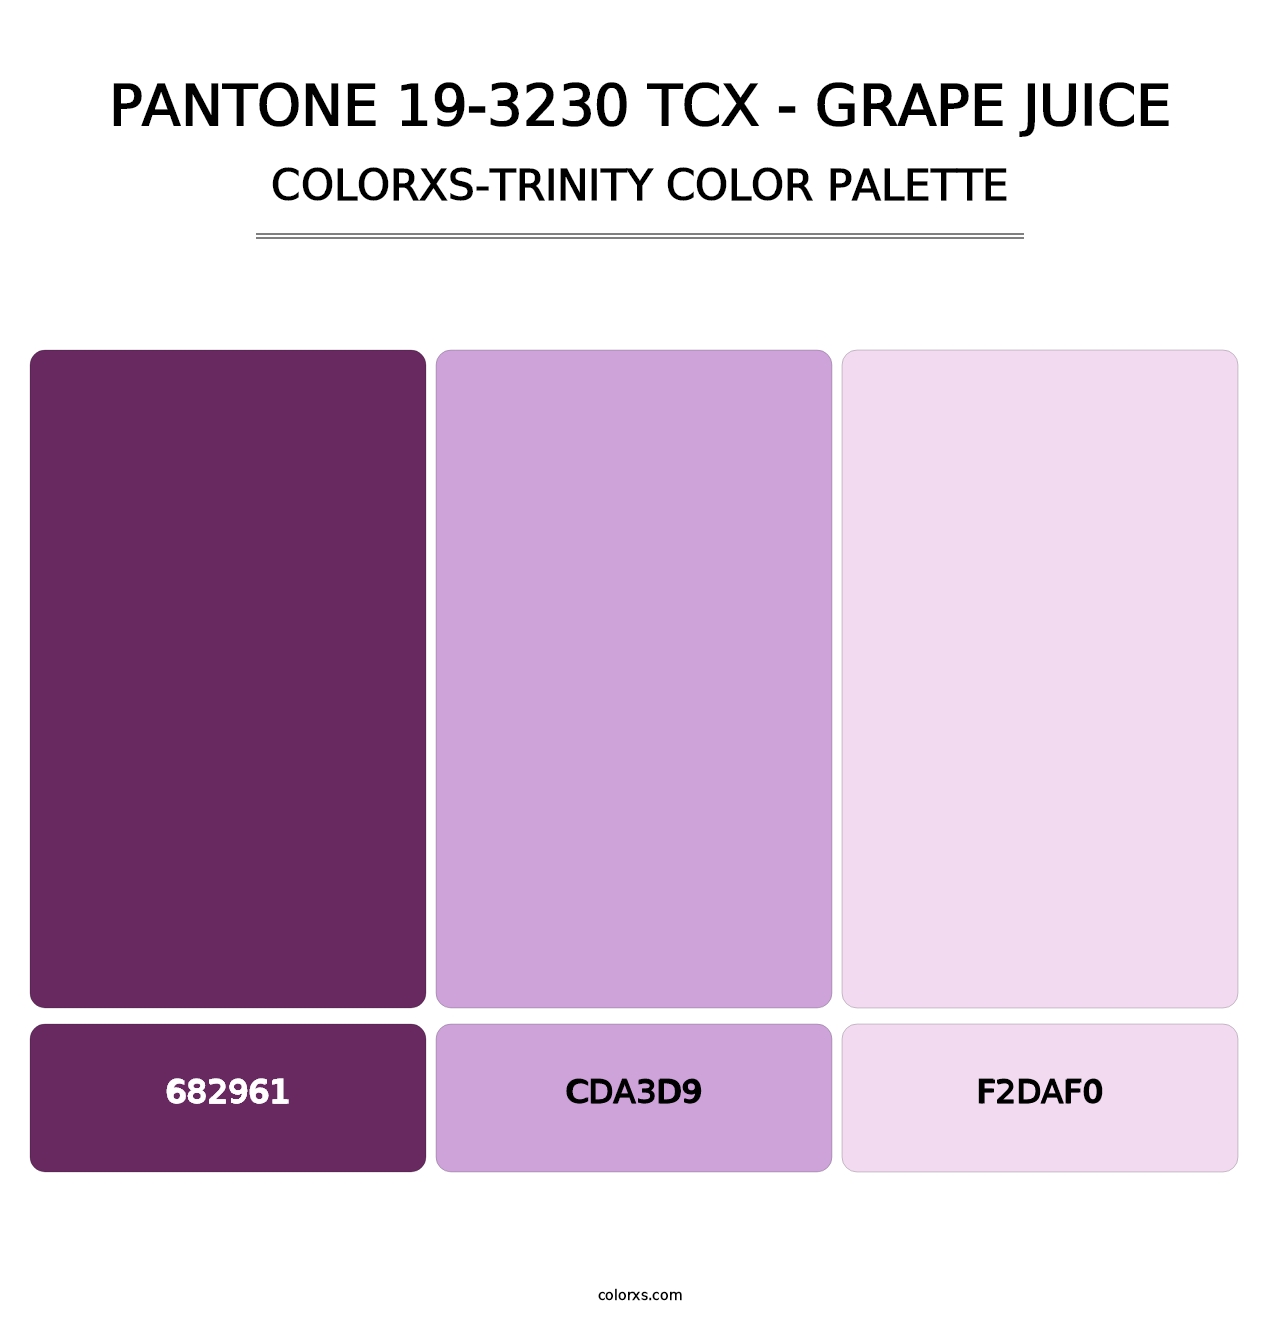 PANTONE 19-3230 TCX - Grape Juice - Colorxs Trinity Palette